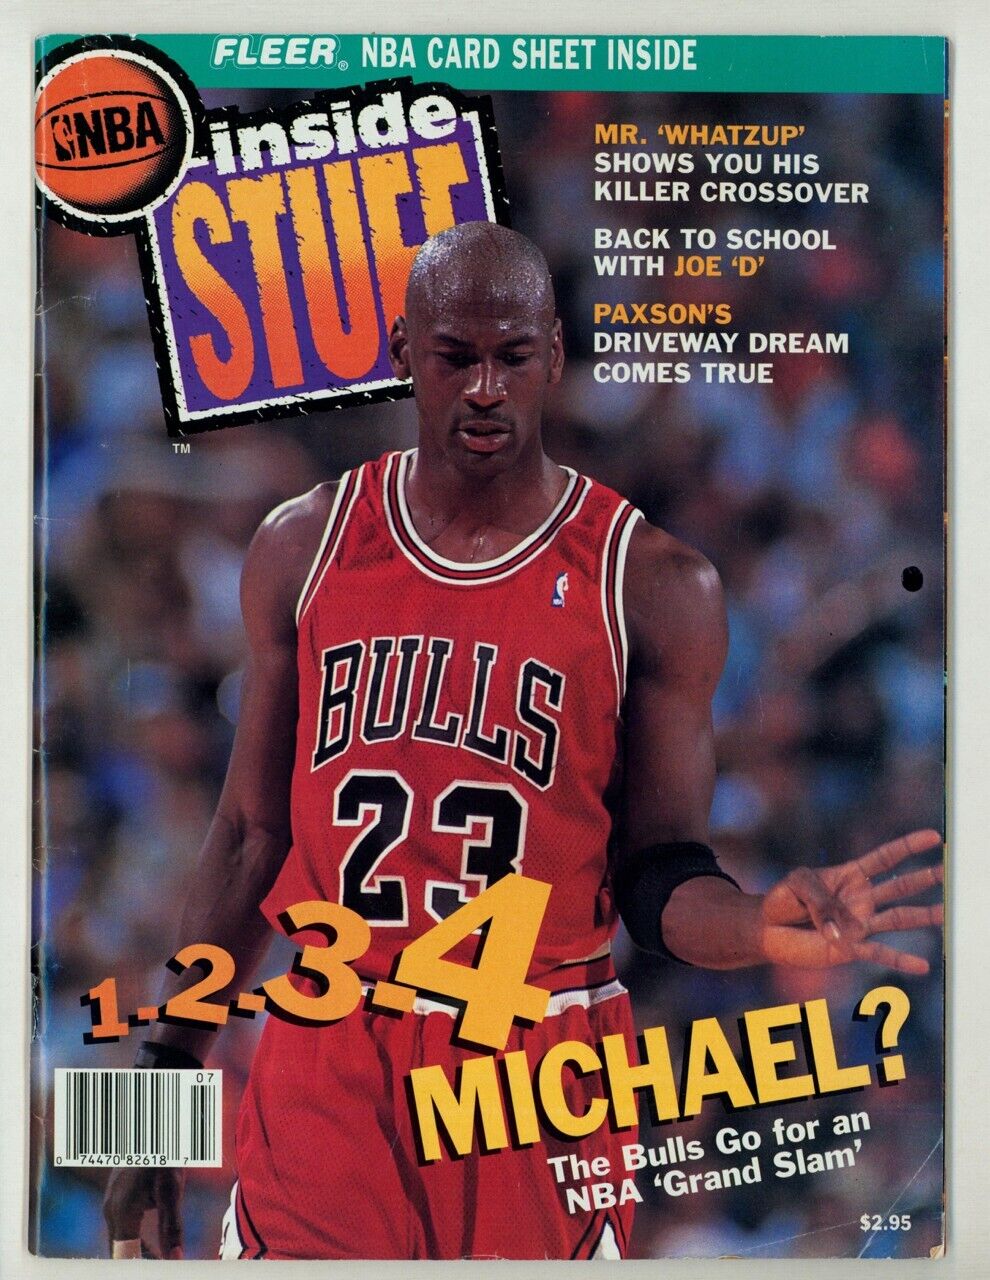 1992 Inside Stuff Michael Jordan Basketball Cover w/ Card Sheet of Fleer NBA